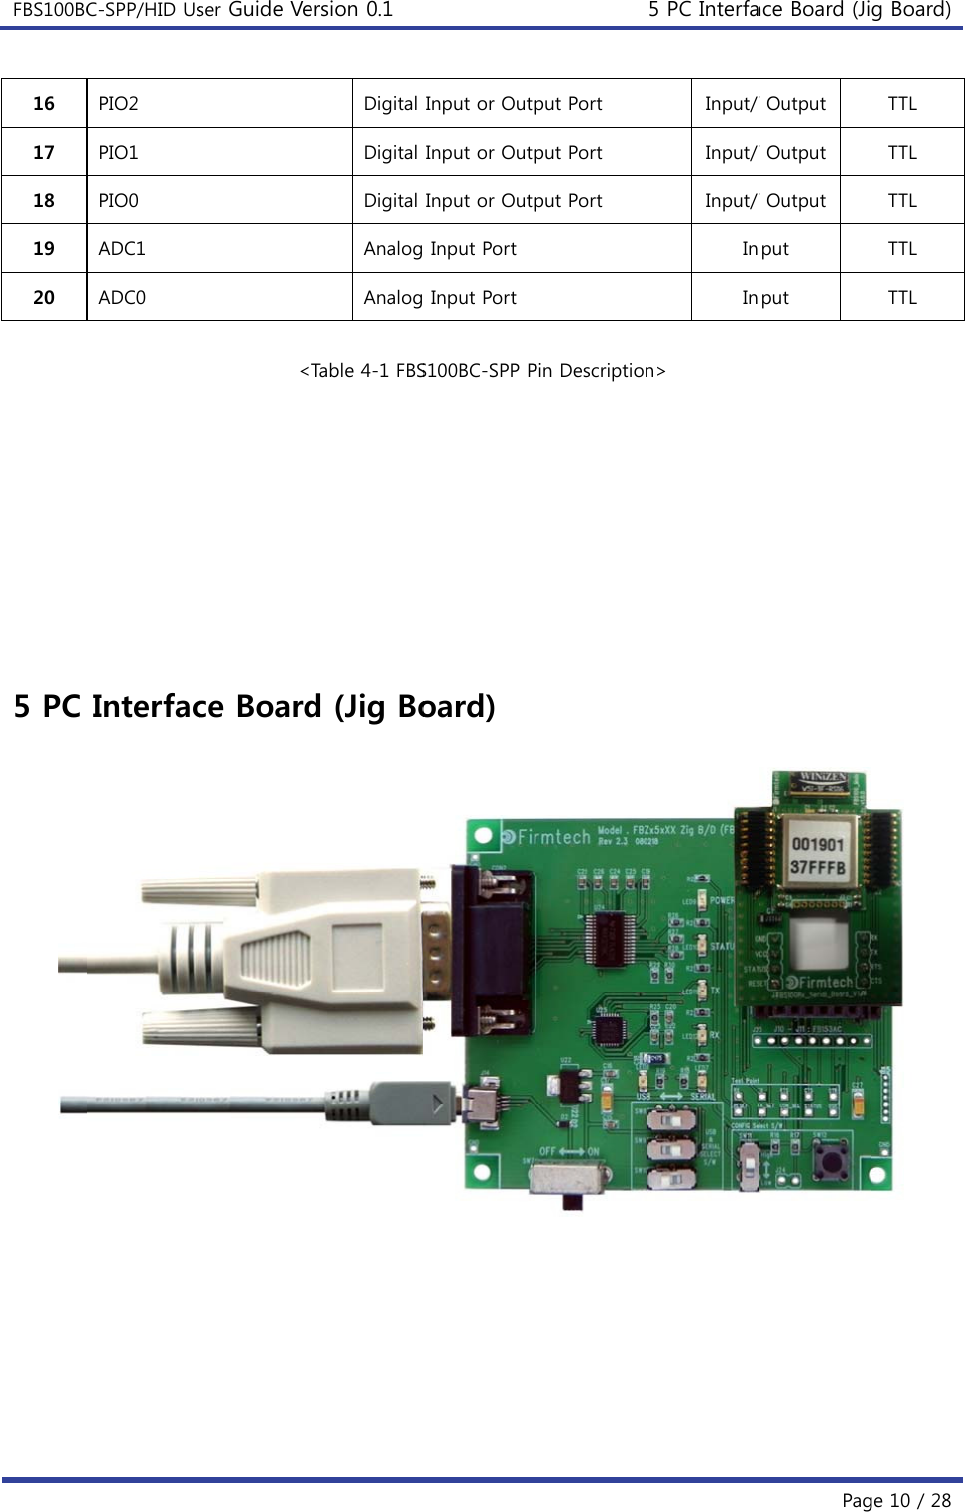 FBS100BC  16 17 18 19 20           5 PC  C-SPP/HID UsPIO2 PIO1 PIO0 ADC1 ADC0 Interfacser Guide Ve&lt;ce Boardersion 0.1 Digital Digital Digital AnalogAnalogTable  4 -1  F BSd (Jig BoInput or OutpInput or OutpInput or Outp Input Port Input PortS100BC-SPP Poard) put Port put Port put Port Pin Description5 PC InterfaInput/ Input/ Input/ InInn&gt; ace Board (JiPag/ Output / Output / Output nput nput g Board)ge 10 / 28 TTL TTL TTL TTL TTL  